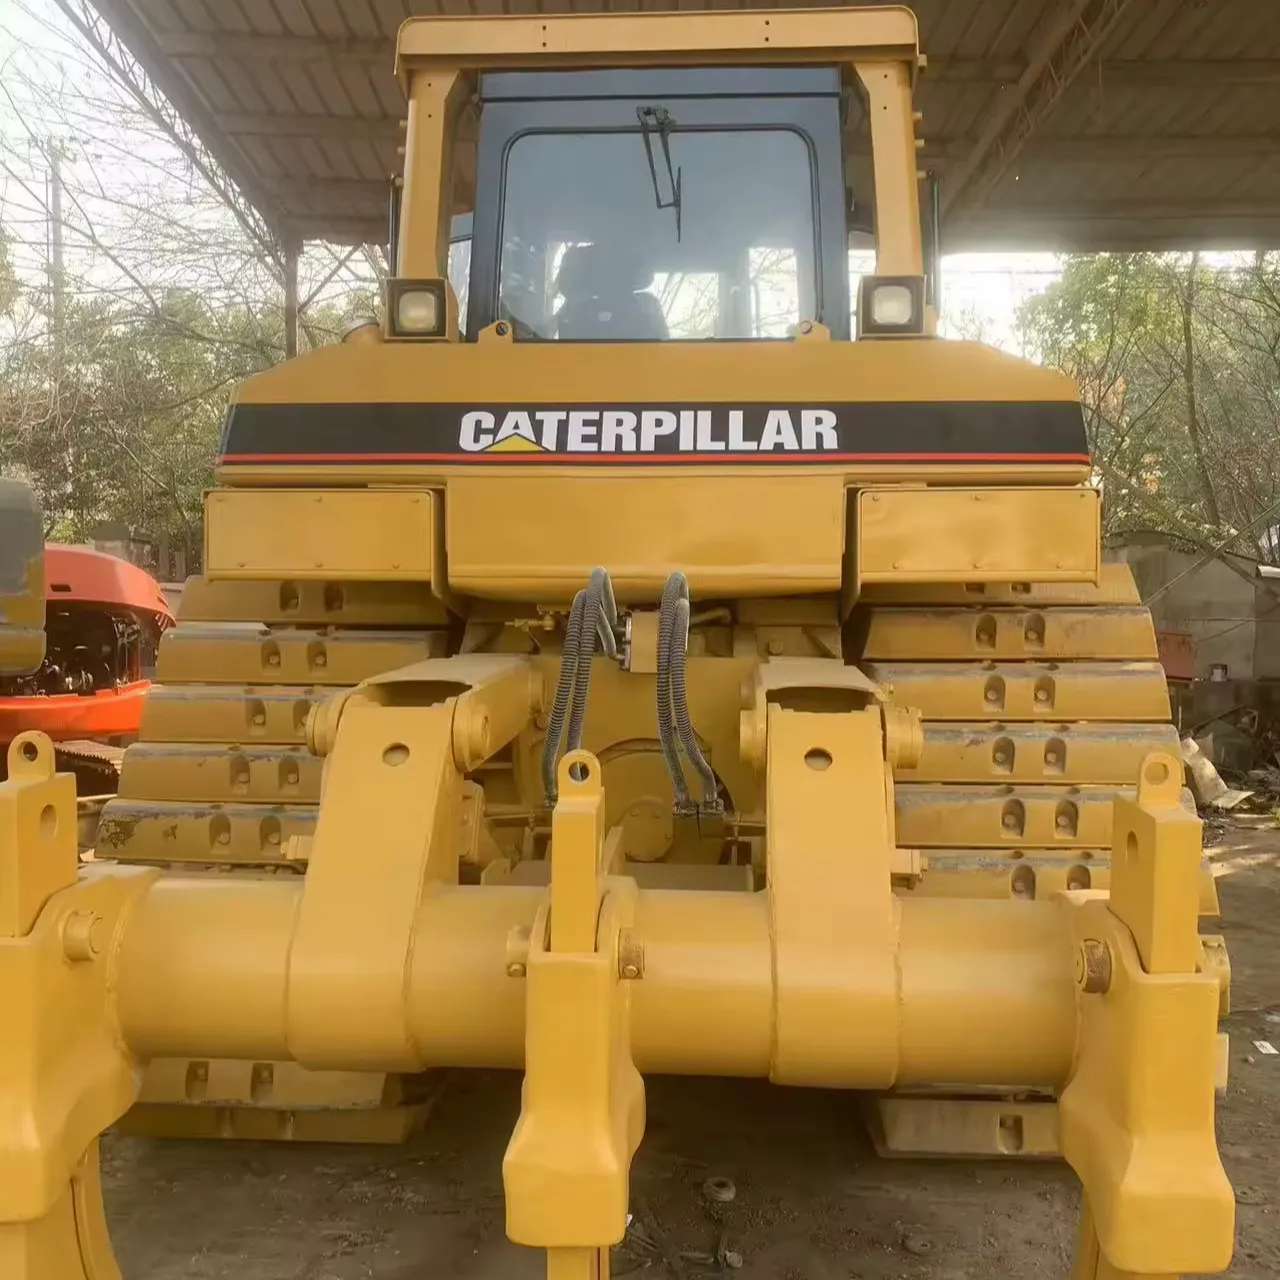 Caterpillar D8N/D8R/D9R original, excavadora de orugas usada de alta calidad a la venta en la ciudad de Shanghái